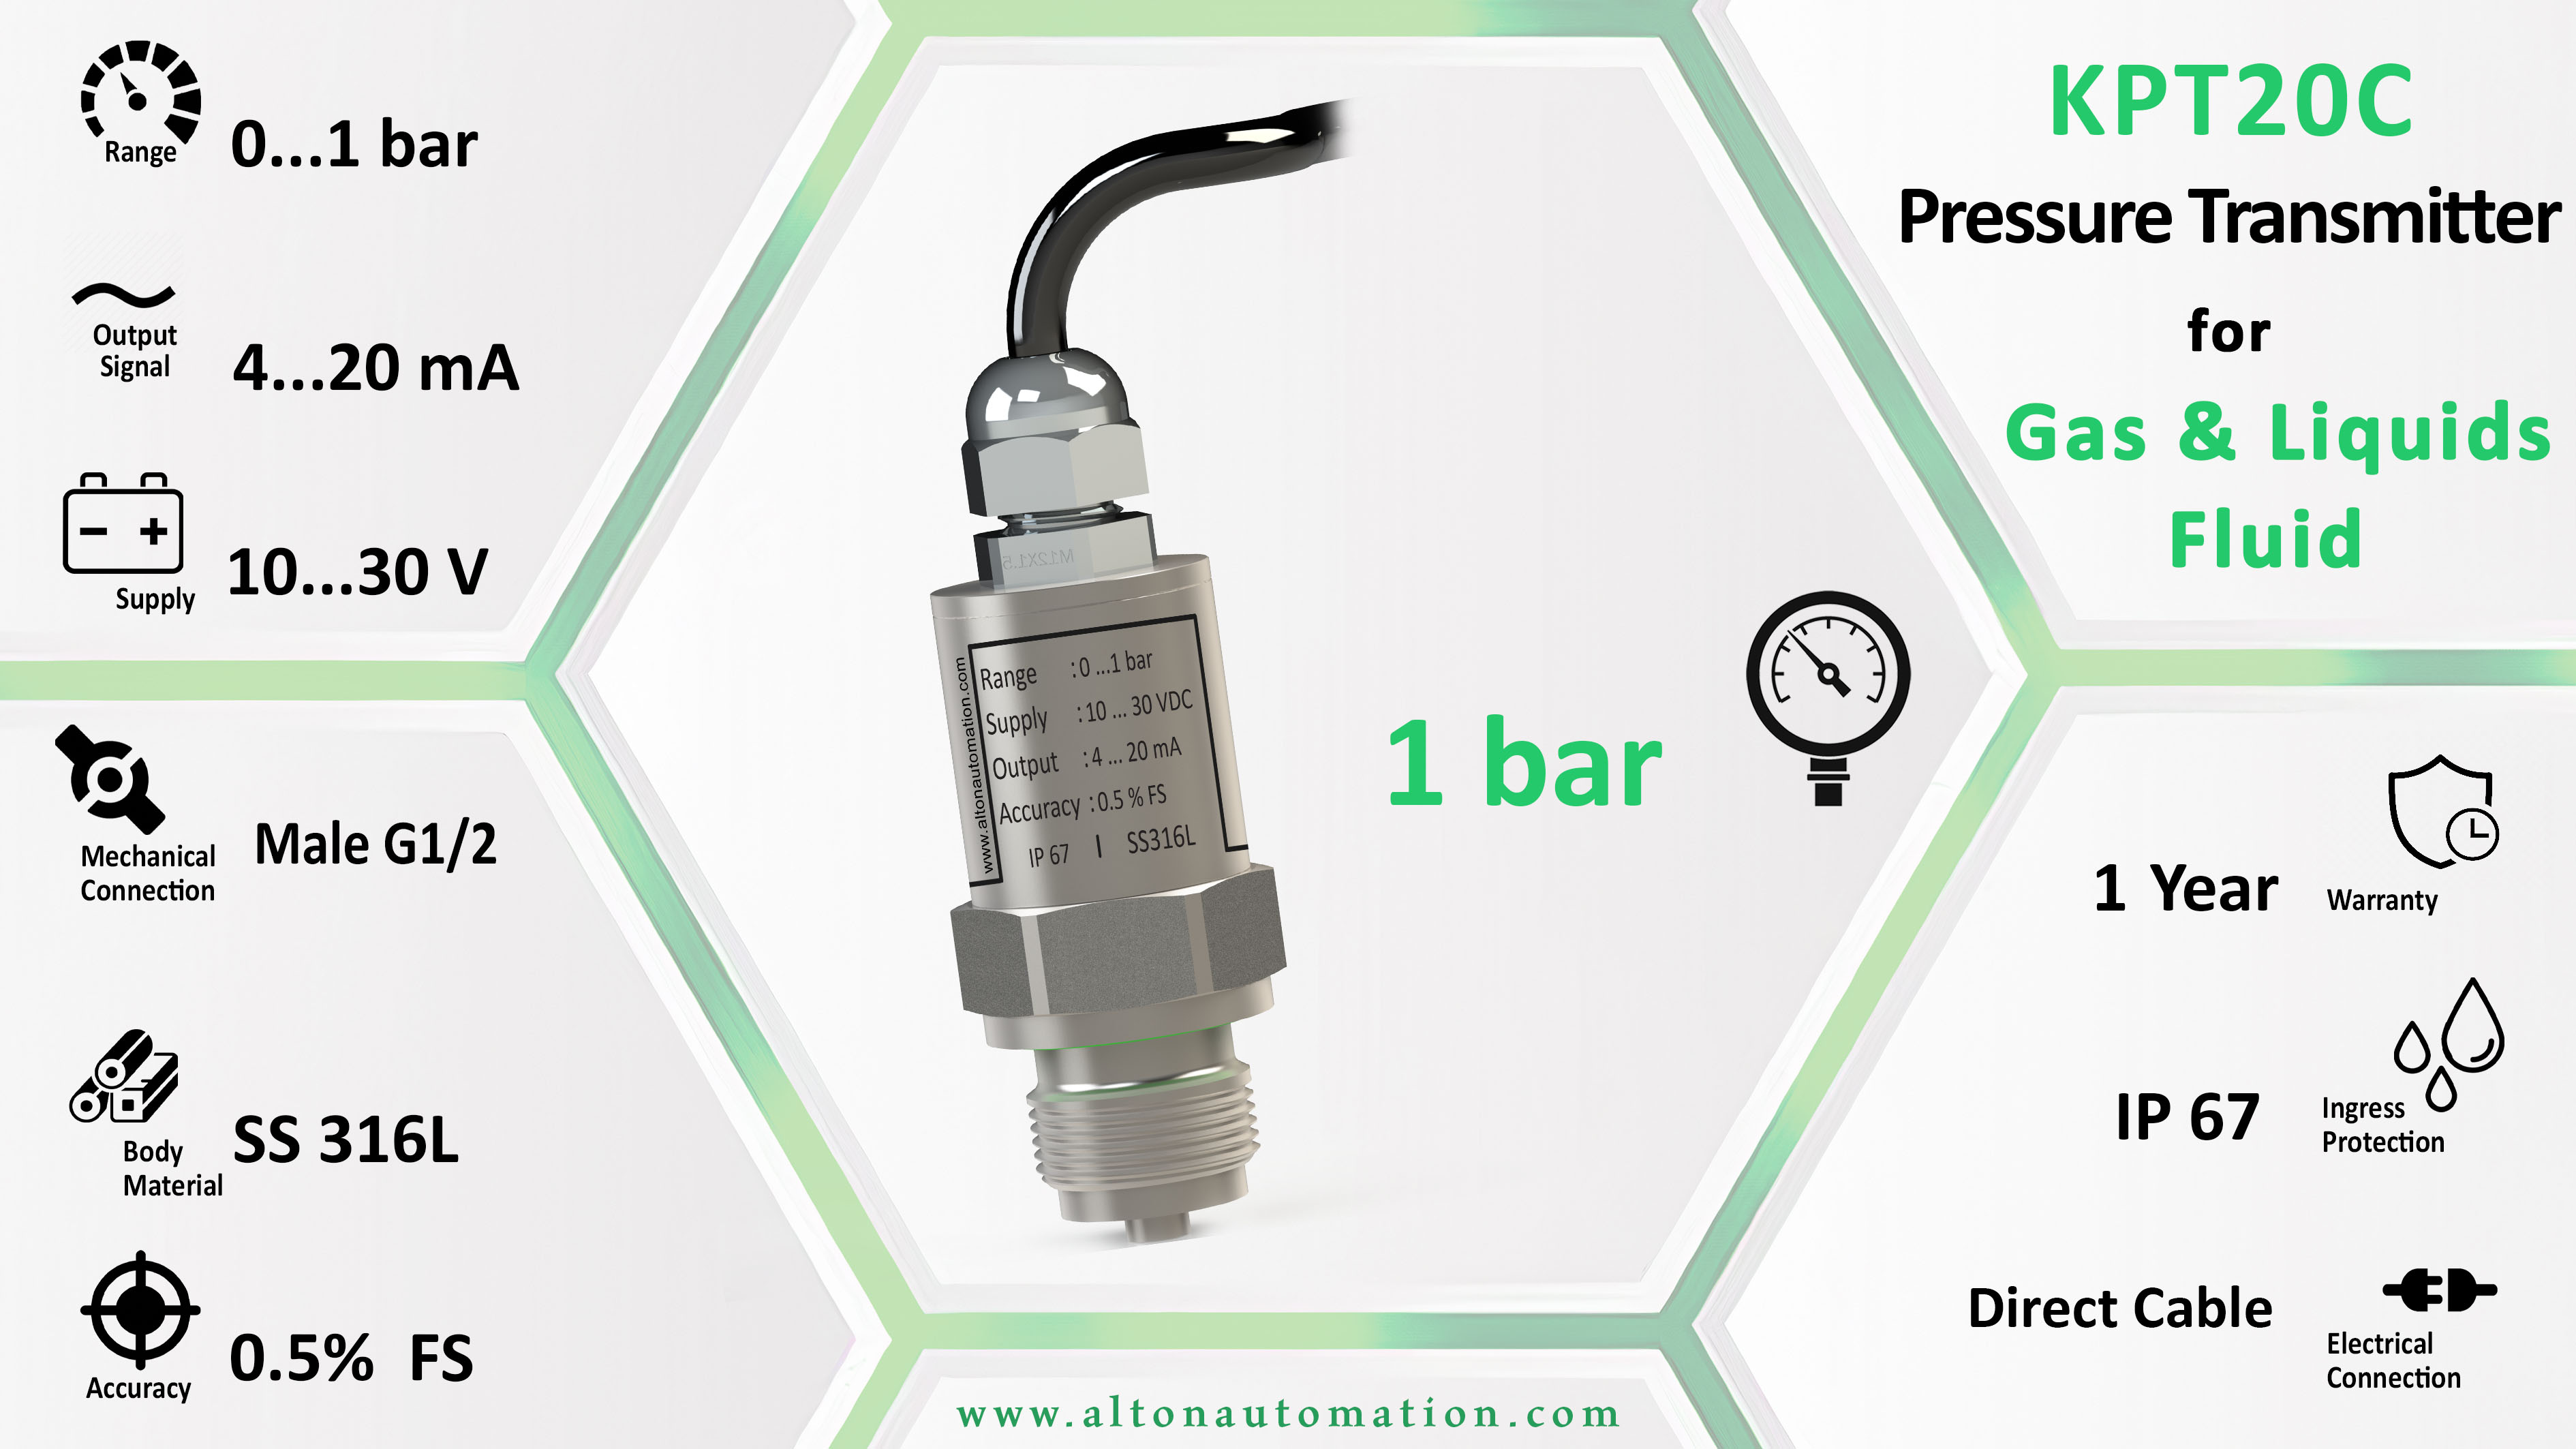 Pressure Transmitter for Gas & Liquids Fluid_KPT20C-001-C1-MG2_image_2